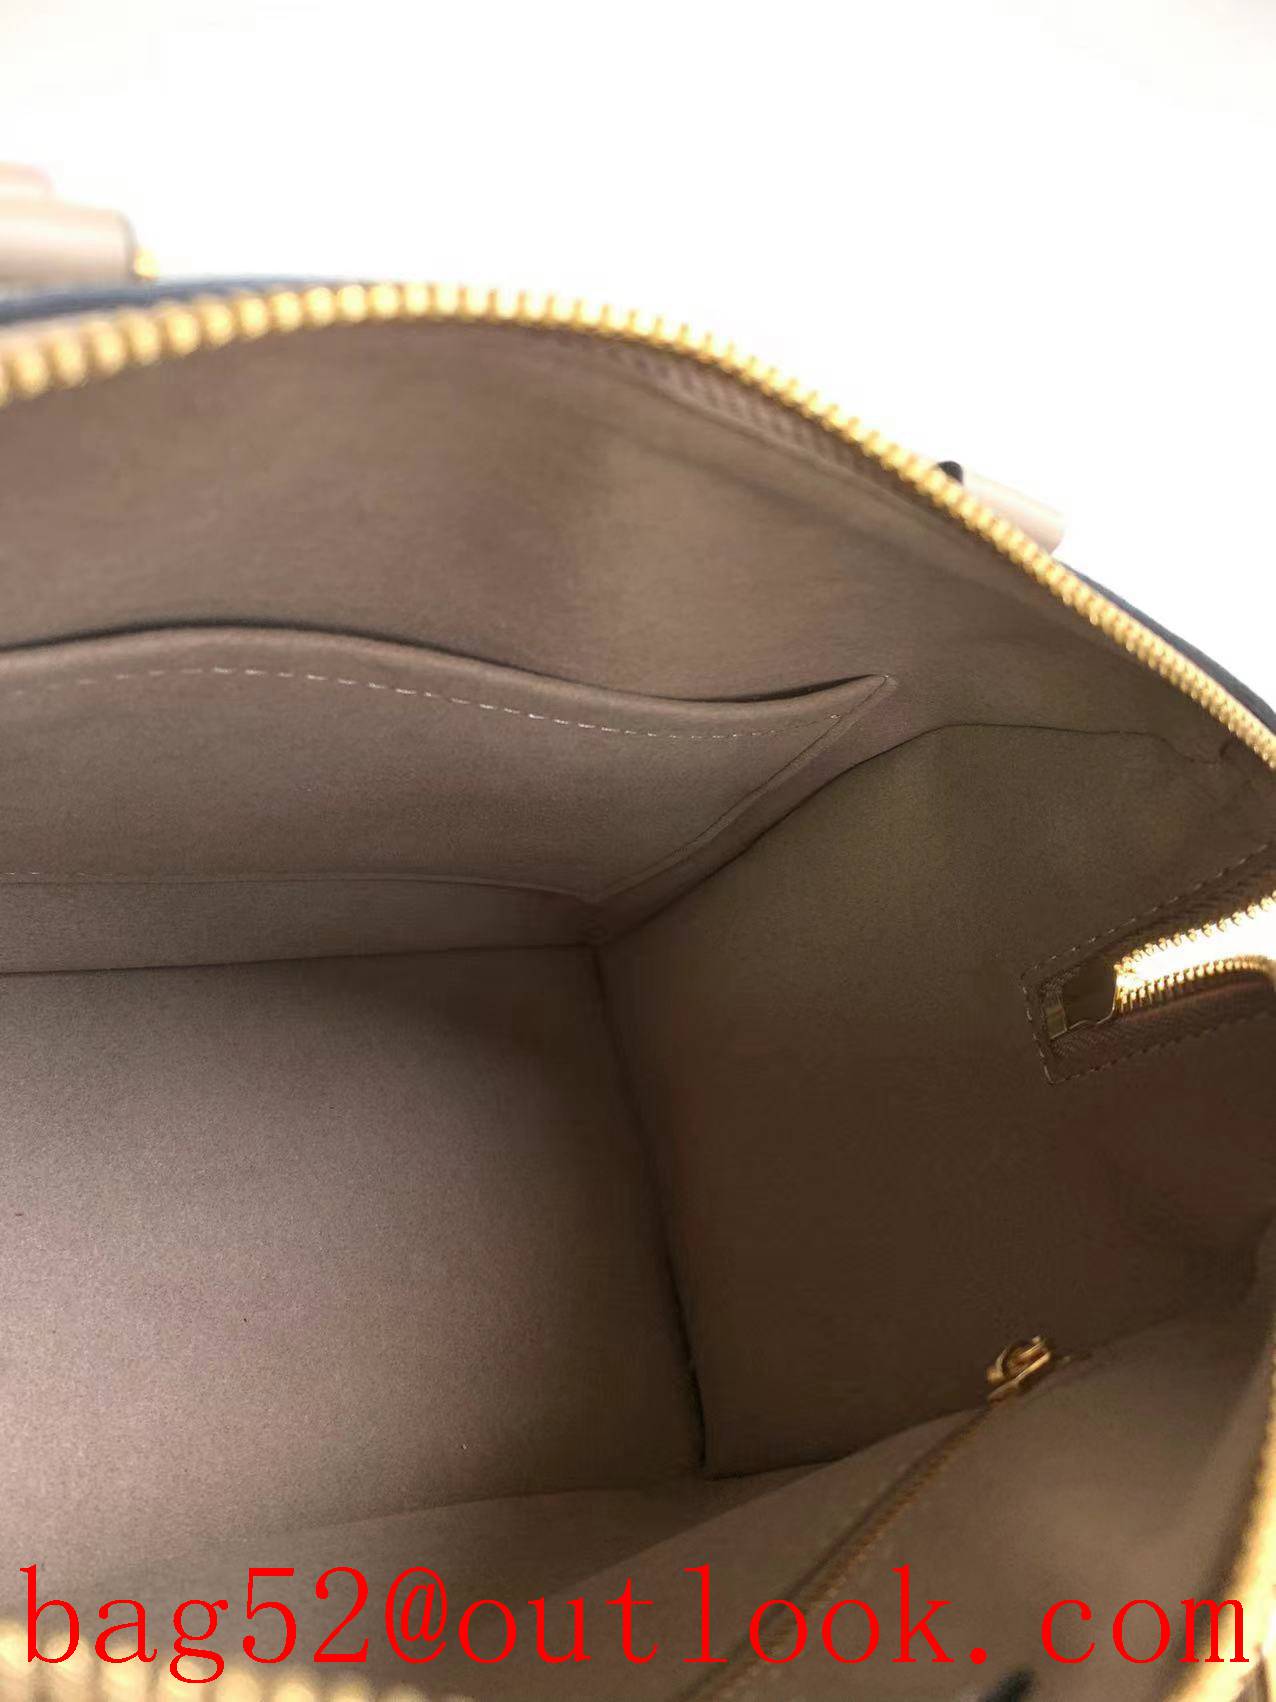 LV Louis Vuitton Monogram Speedy Bandouliere 25 Bag Handbag M59273 Khaki